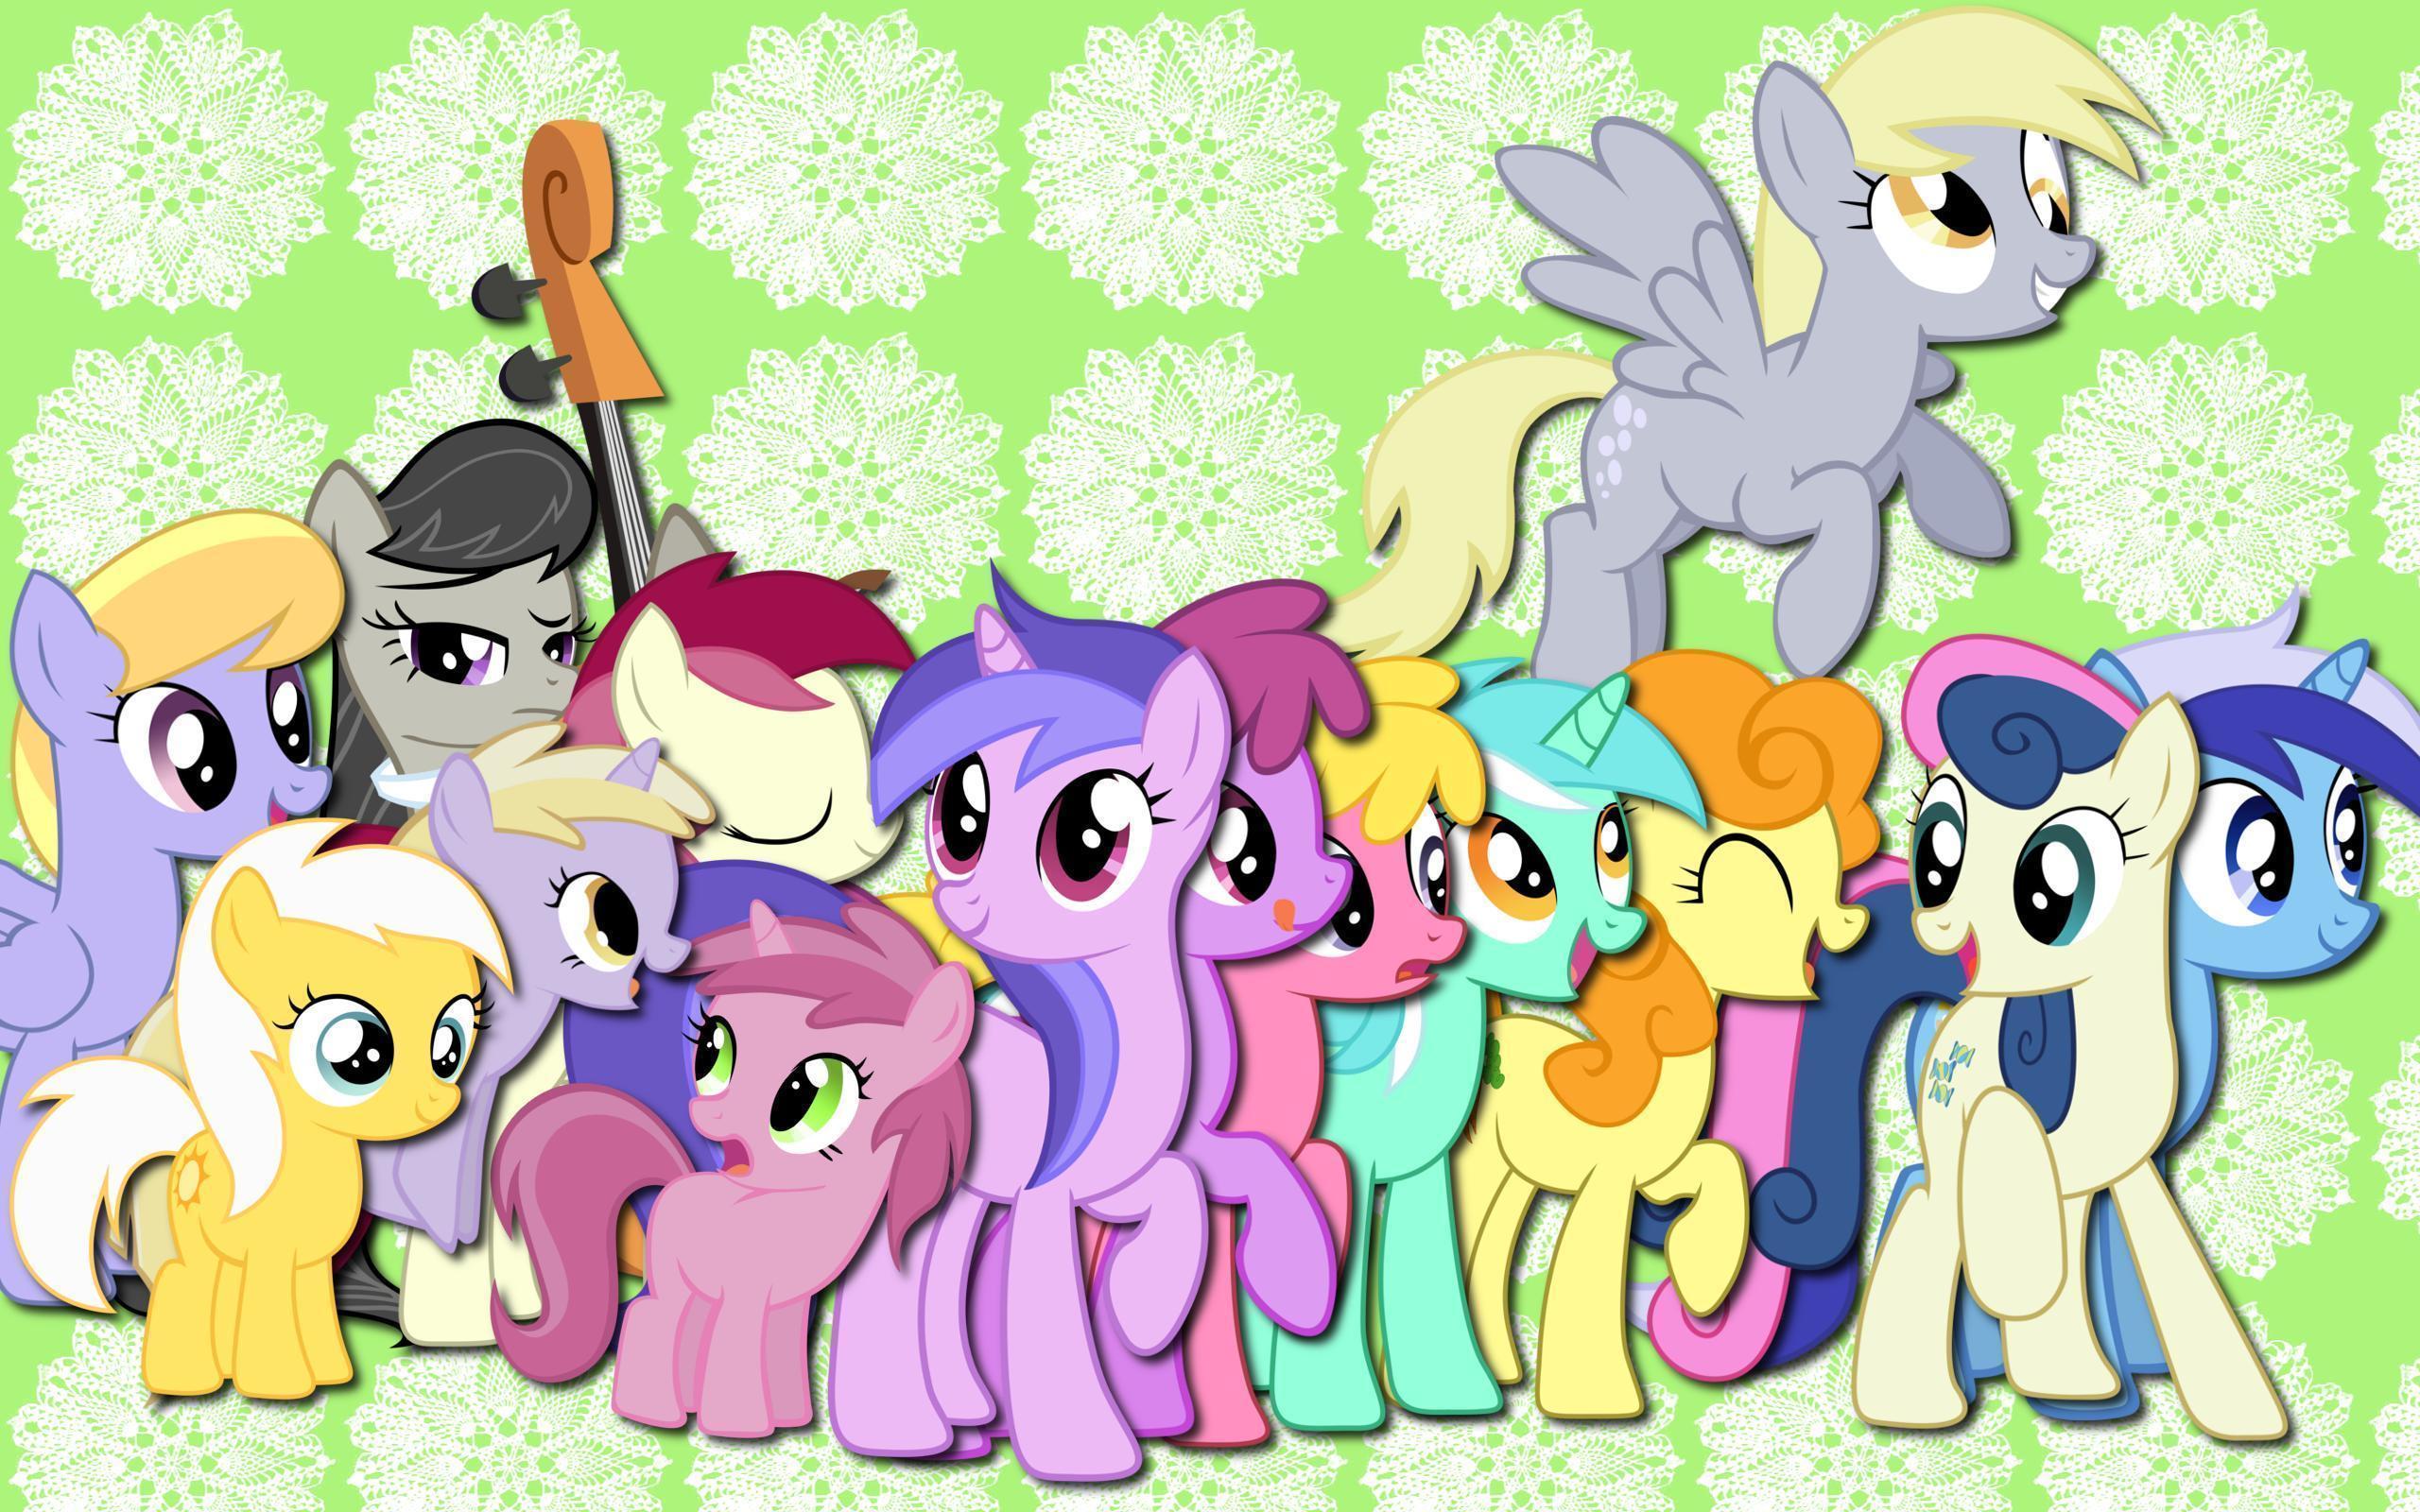 Background Pony Fun! Little Pony Friendship is Magic Photo